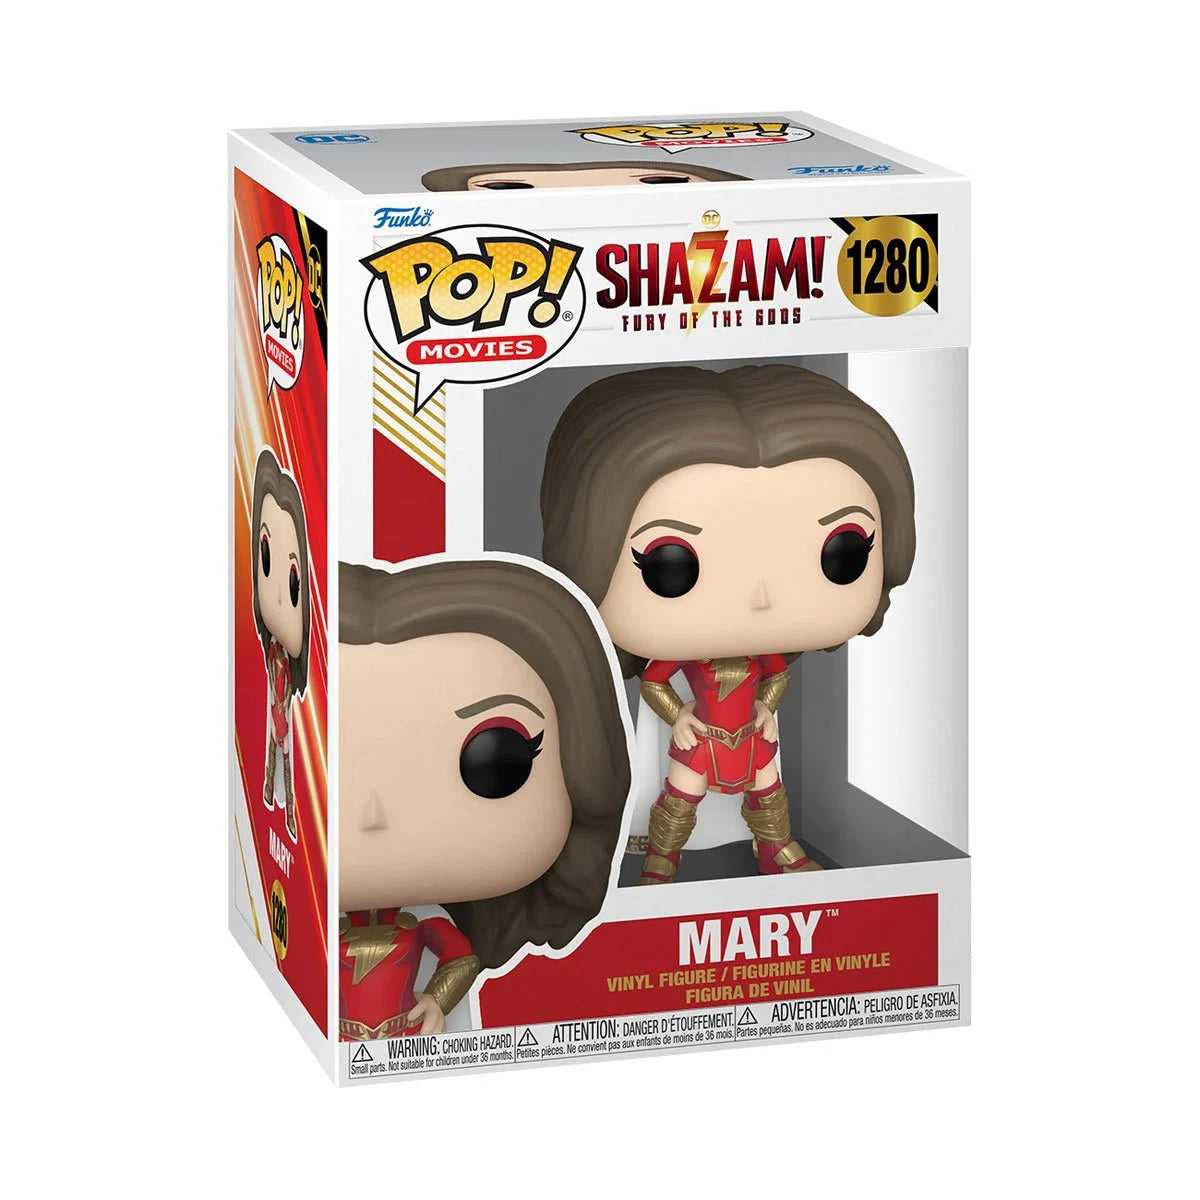 Mary Shazam! Fury of the Gods Pop! Vinyl Figure